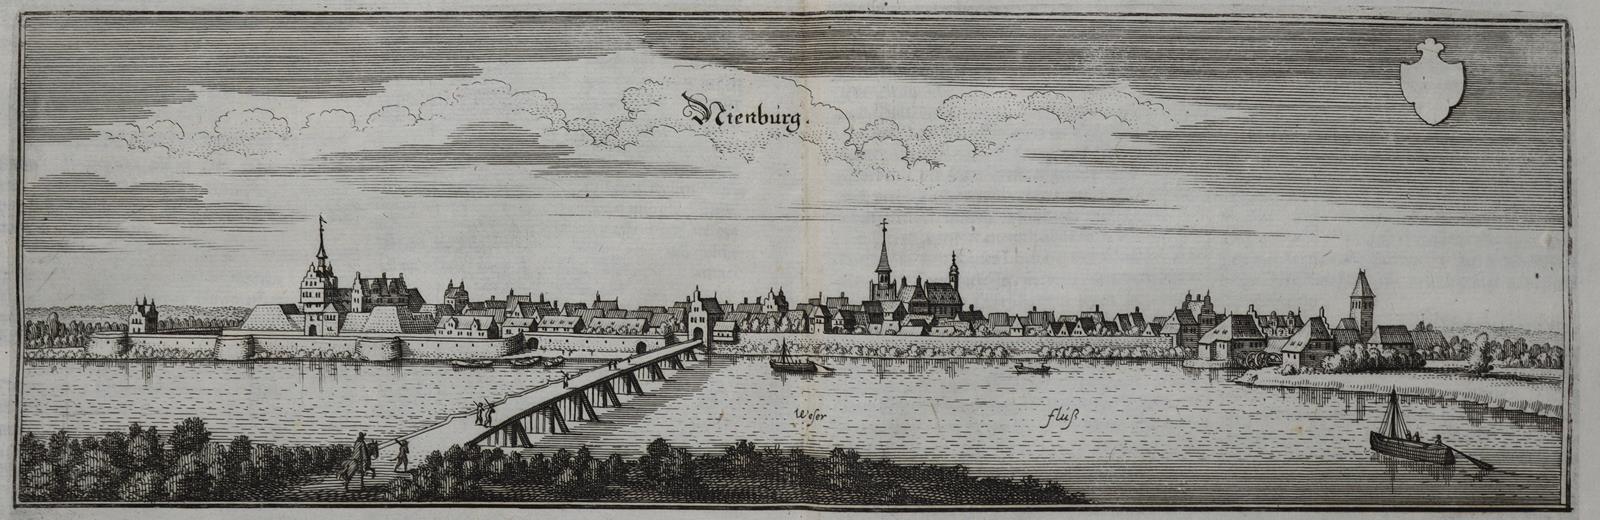 Nienburg. | Bild Nr.1